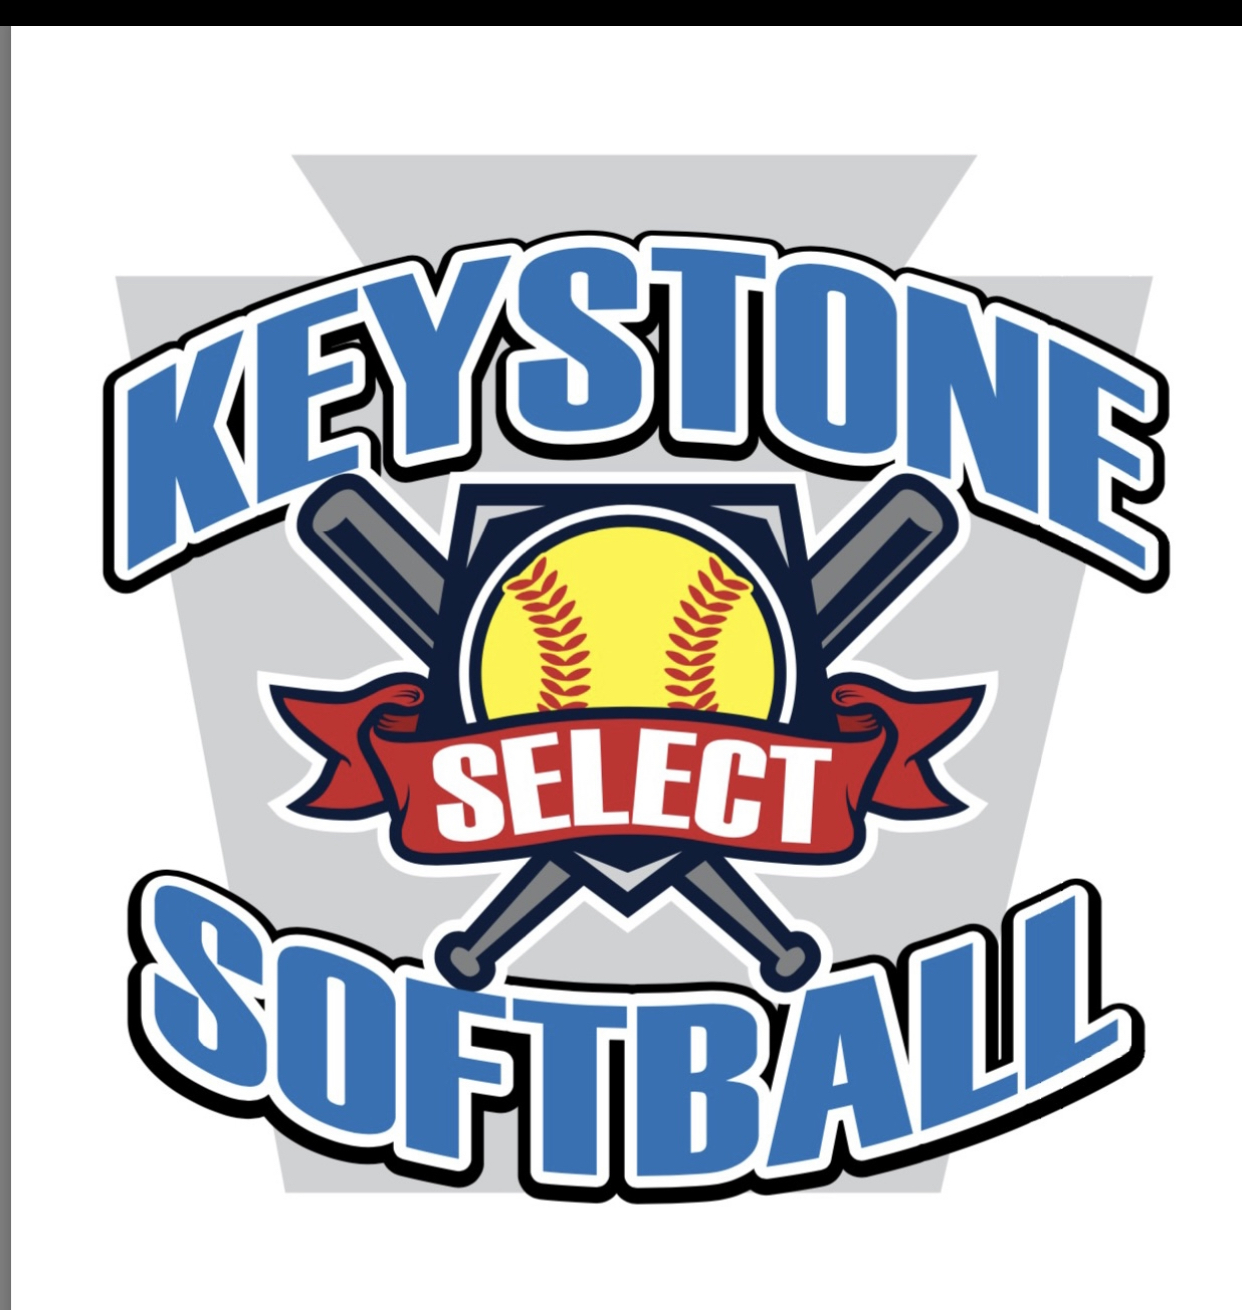 Keystone Select Softball Fastpitch Frenzy Logo